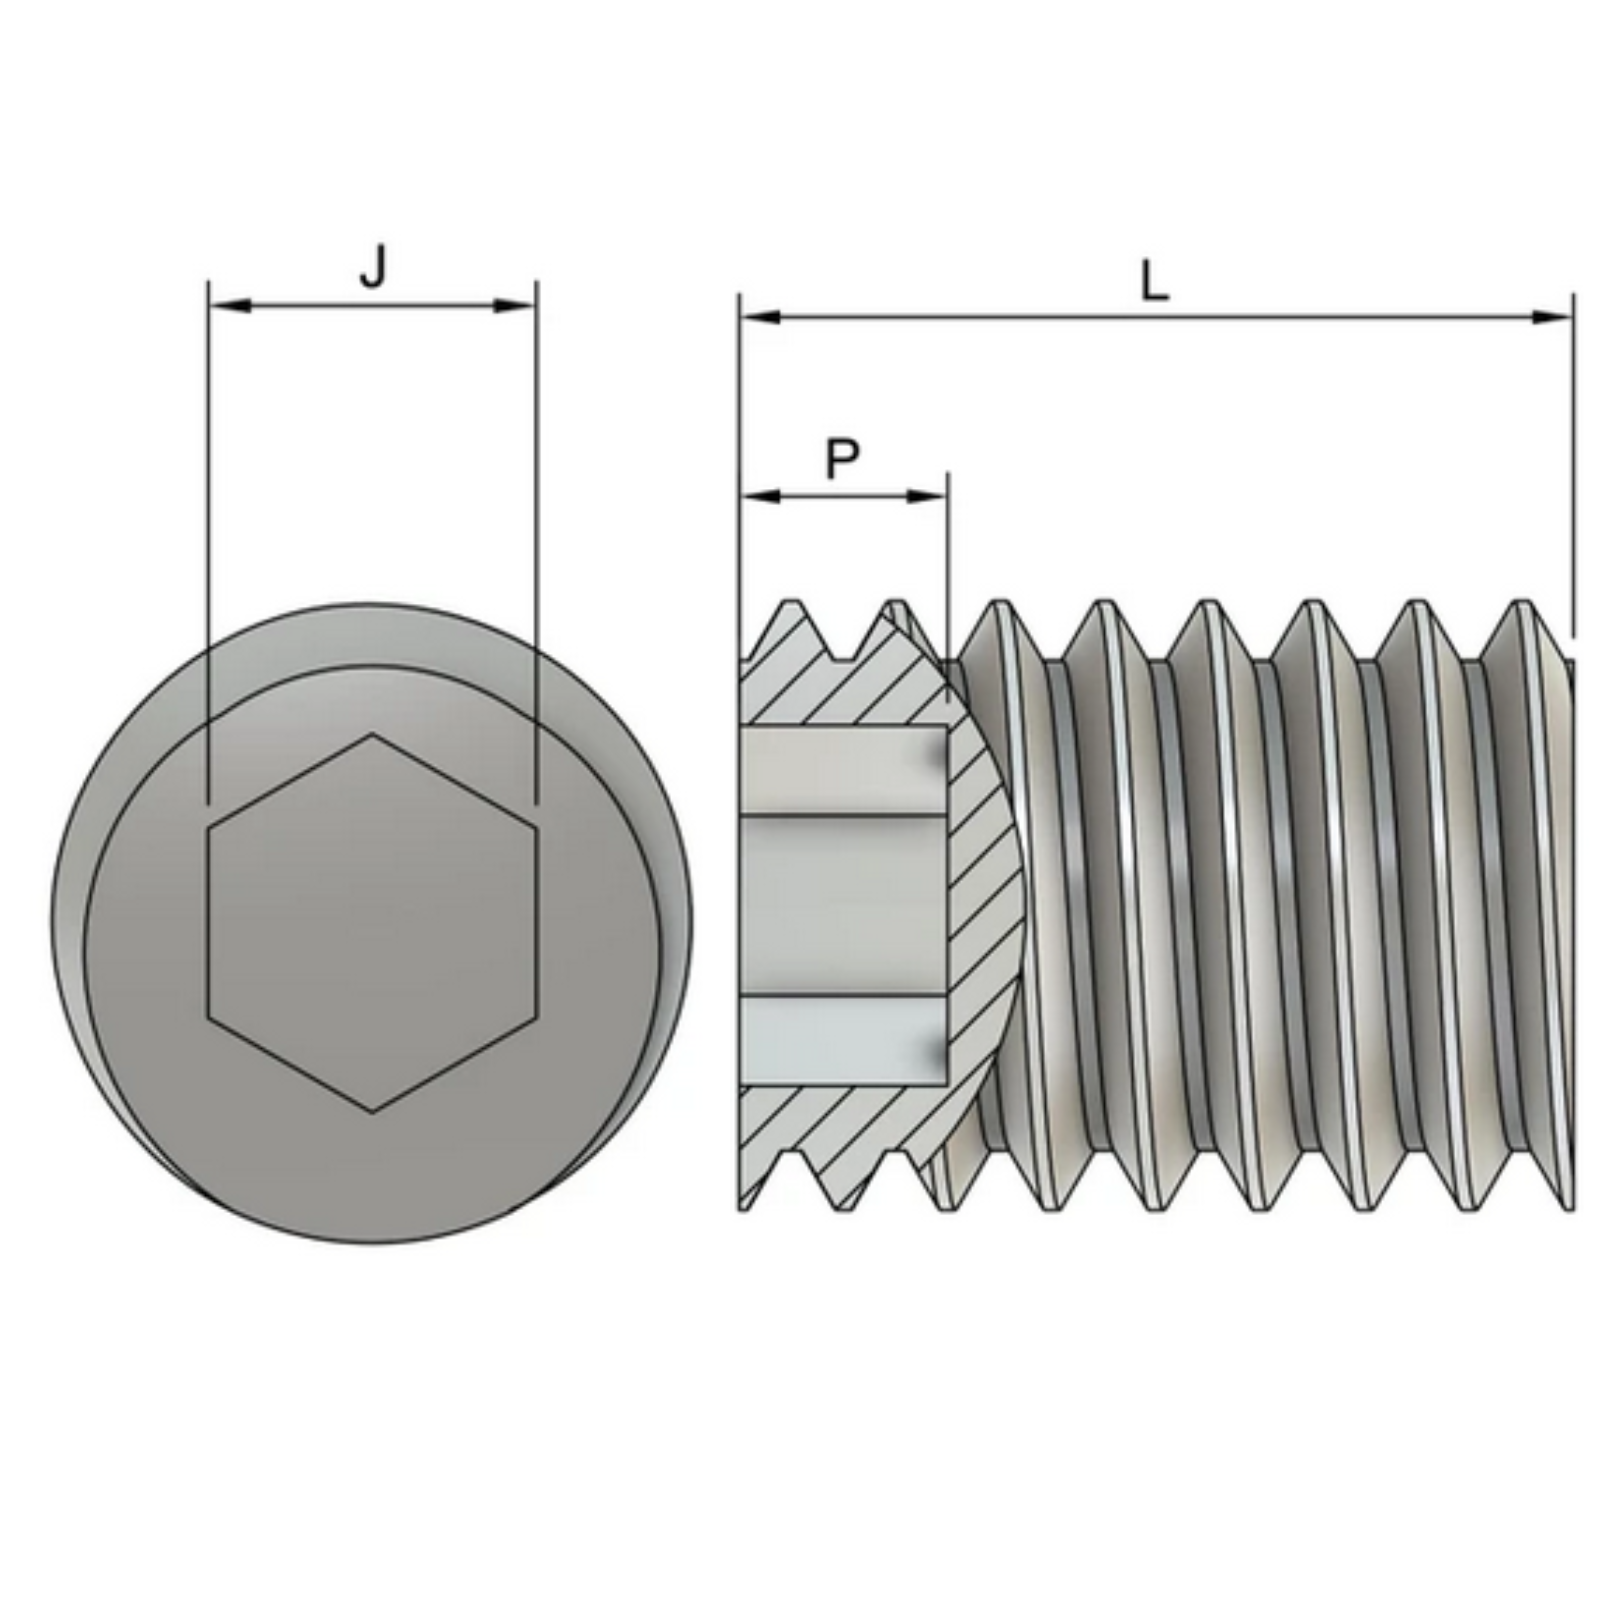 M2 Flat Point Set / Grub Screws (DIN 913) - Stainless Steel (A2)